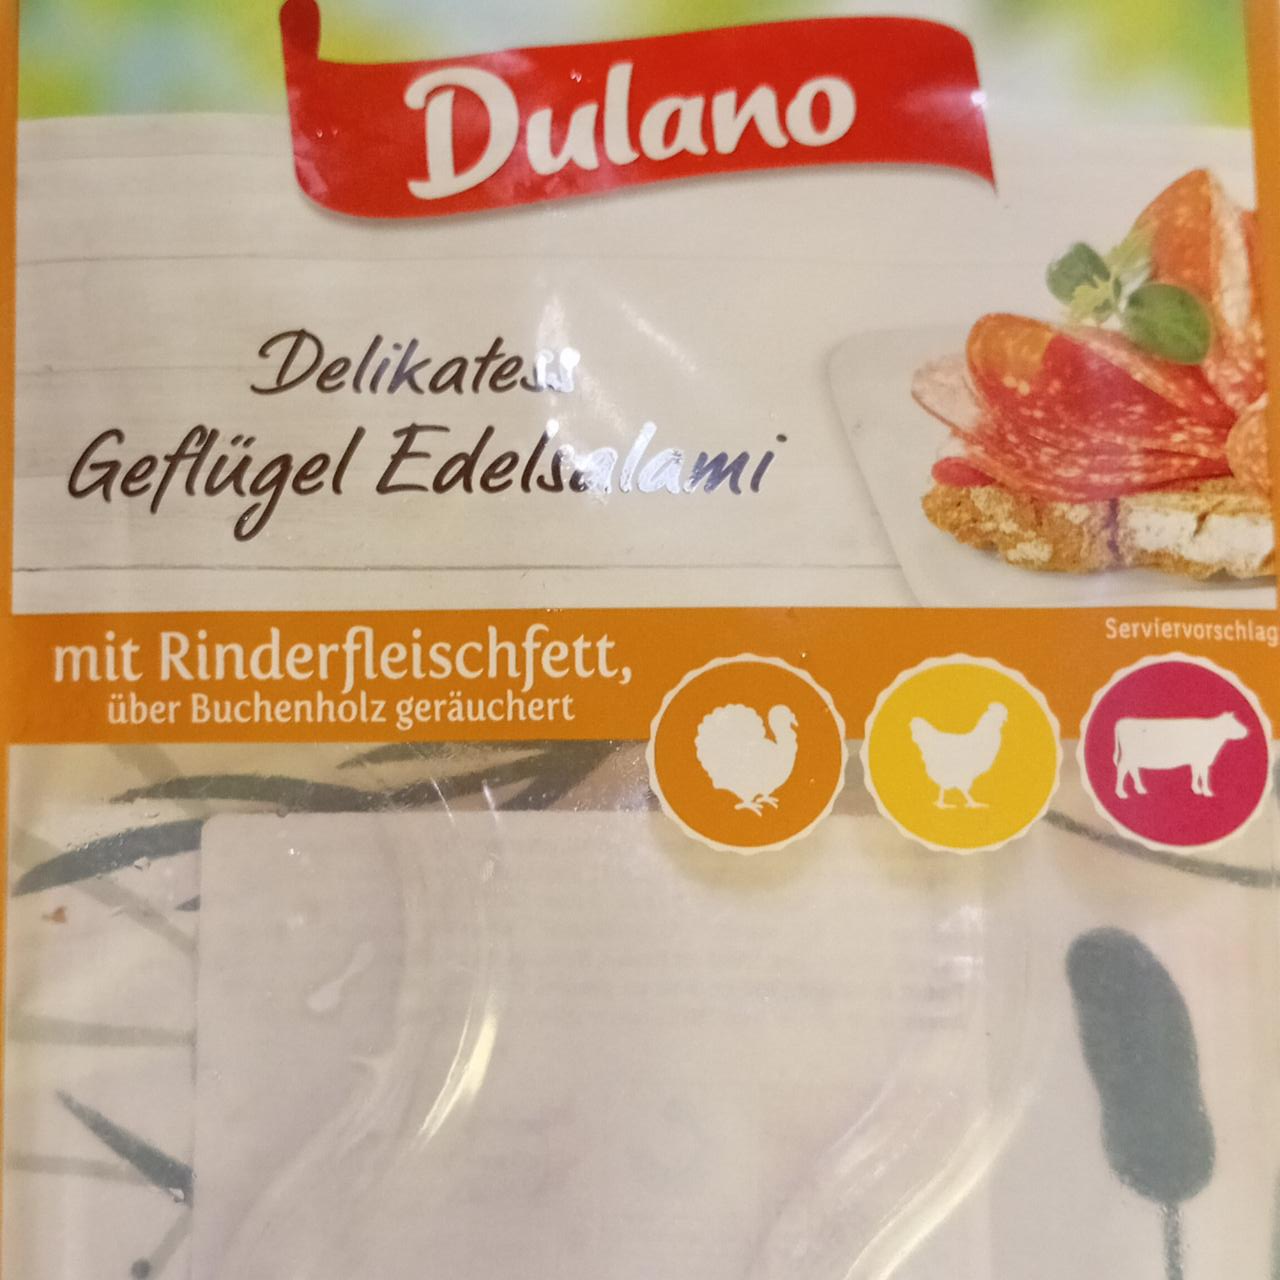 Delikatess Geflügel Edelsalami Rinderfleischfett kalorie, hodnoty a geräuchert nutriční mit Dulano kJ 